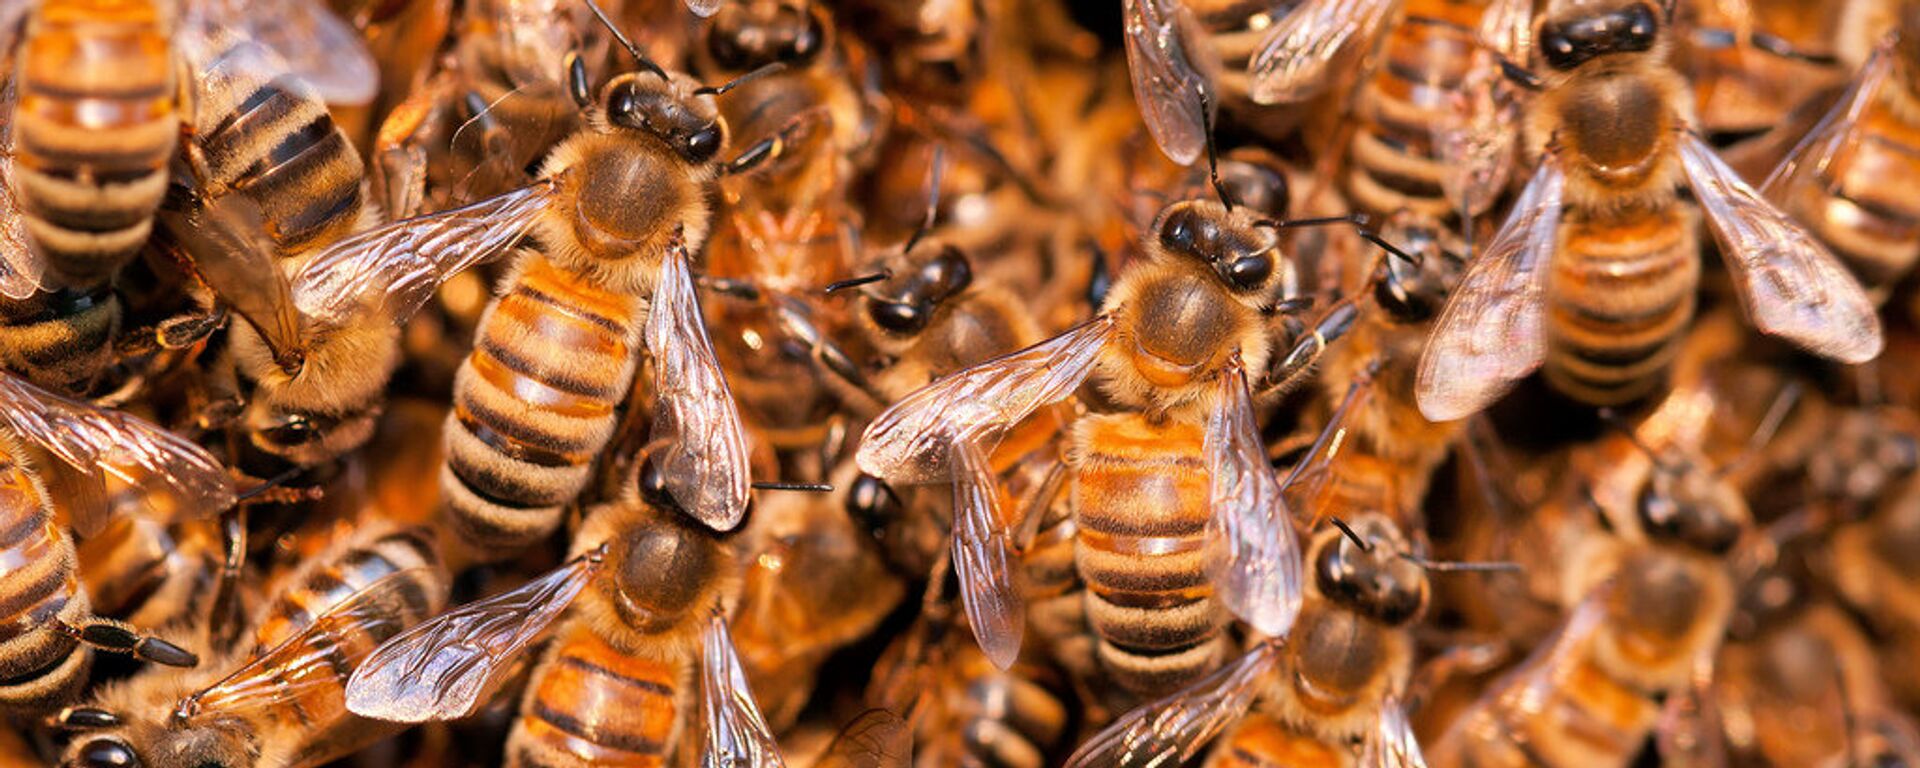 Honey Bee Swarm - Sputnik International, 1920, 11.11.2021